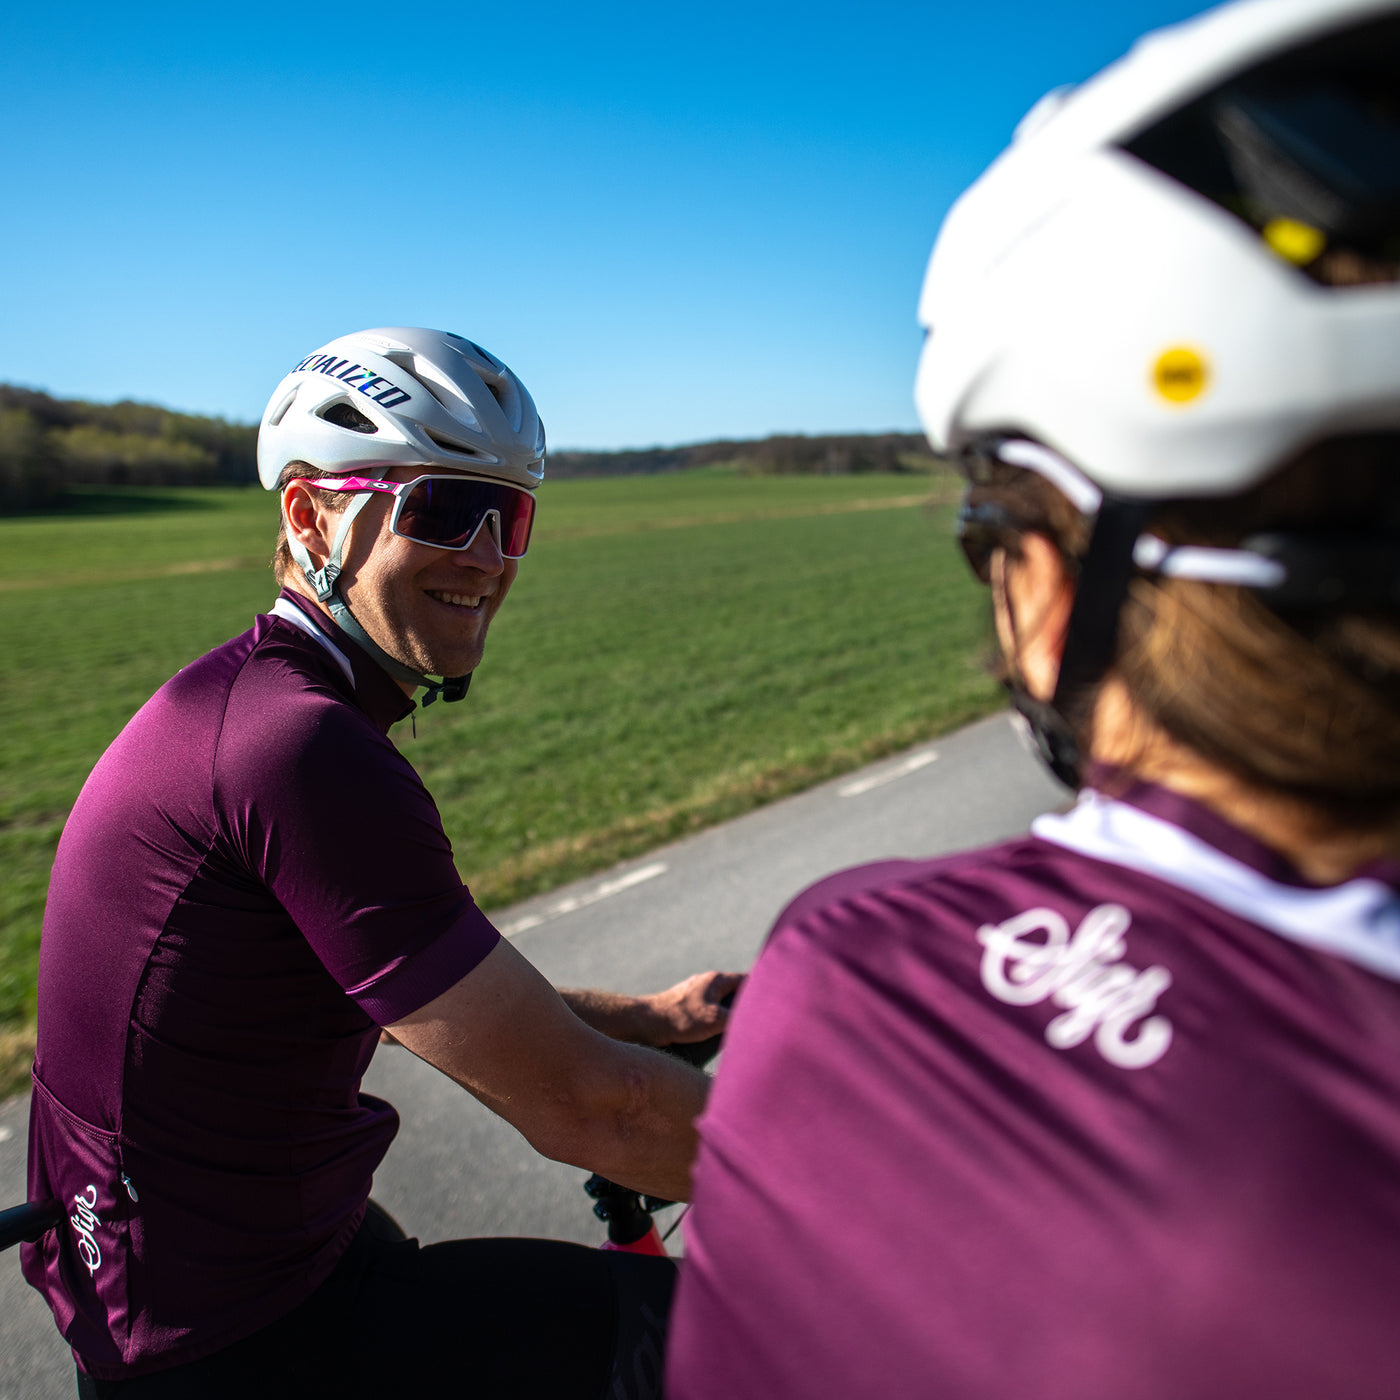 Sigr Lila Hortensia - Purple Cycling Jersey for Men